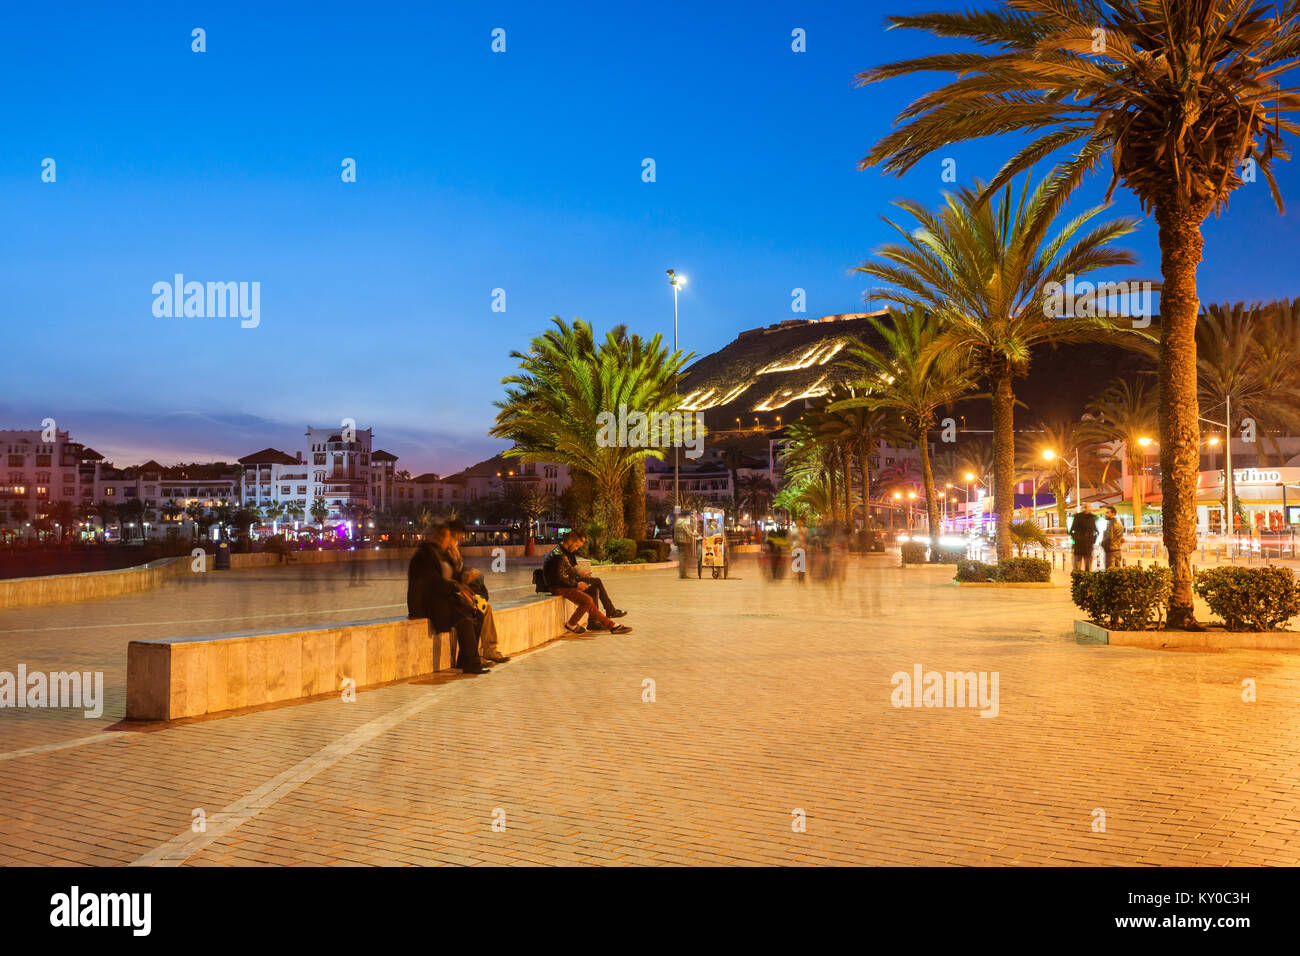 AGADIR, MOROCCO - FEBRUARY 20, 2016: Agadir seafront promenade at the  night, Morocco. Agadir is a major city in Morocco located on the shore of  Atlant Stock Photo - Alamy